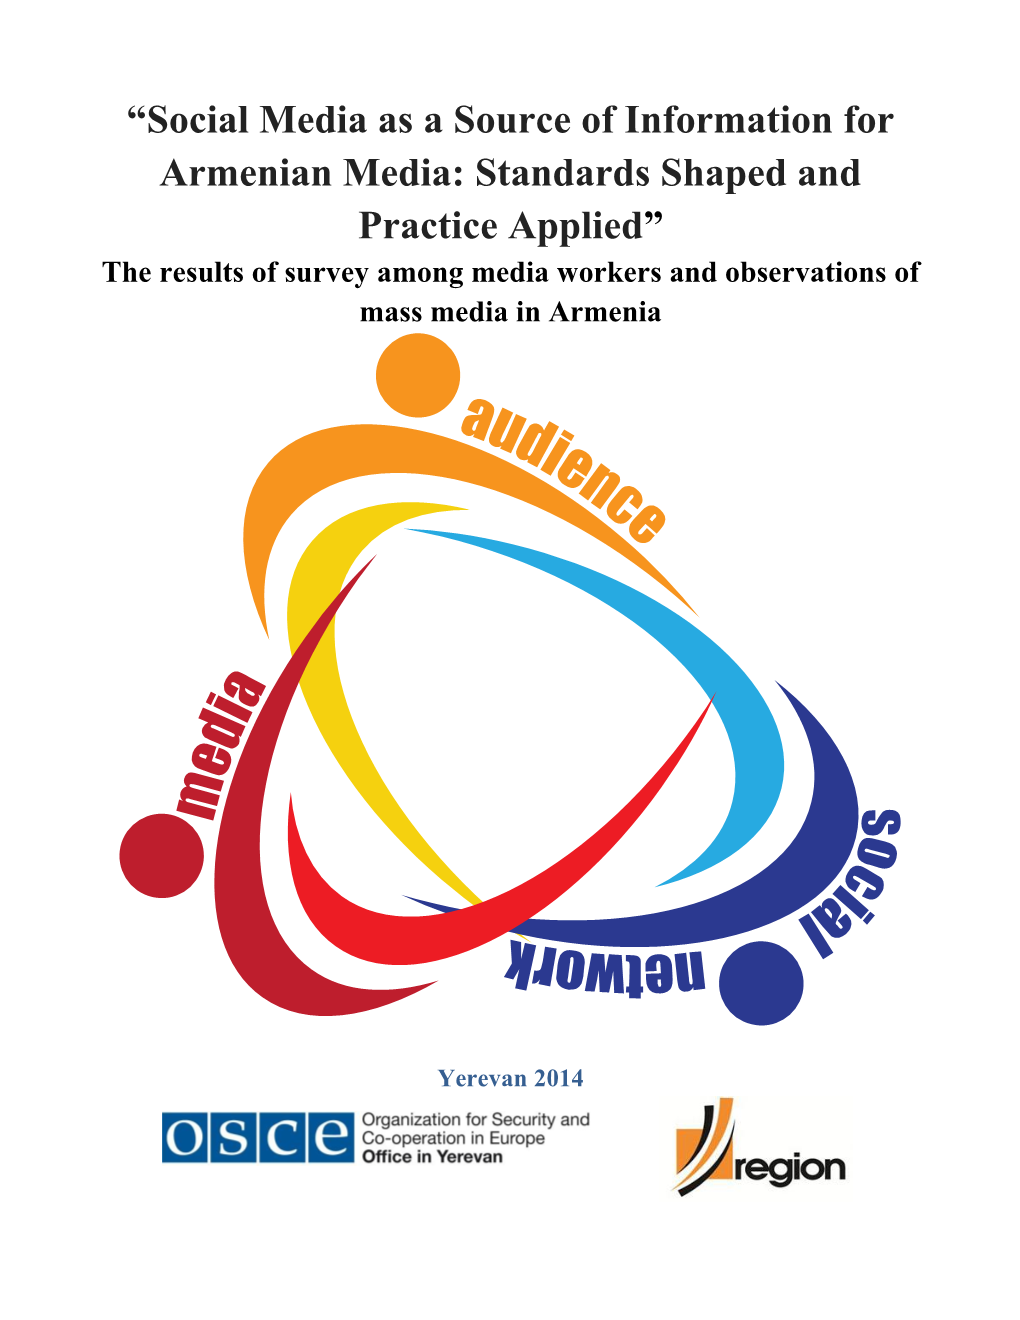 “Social Media As a Source of Information for Armenian Media